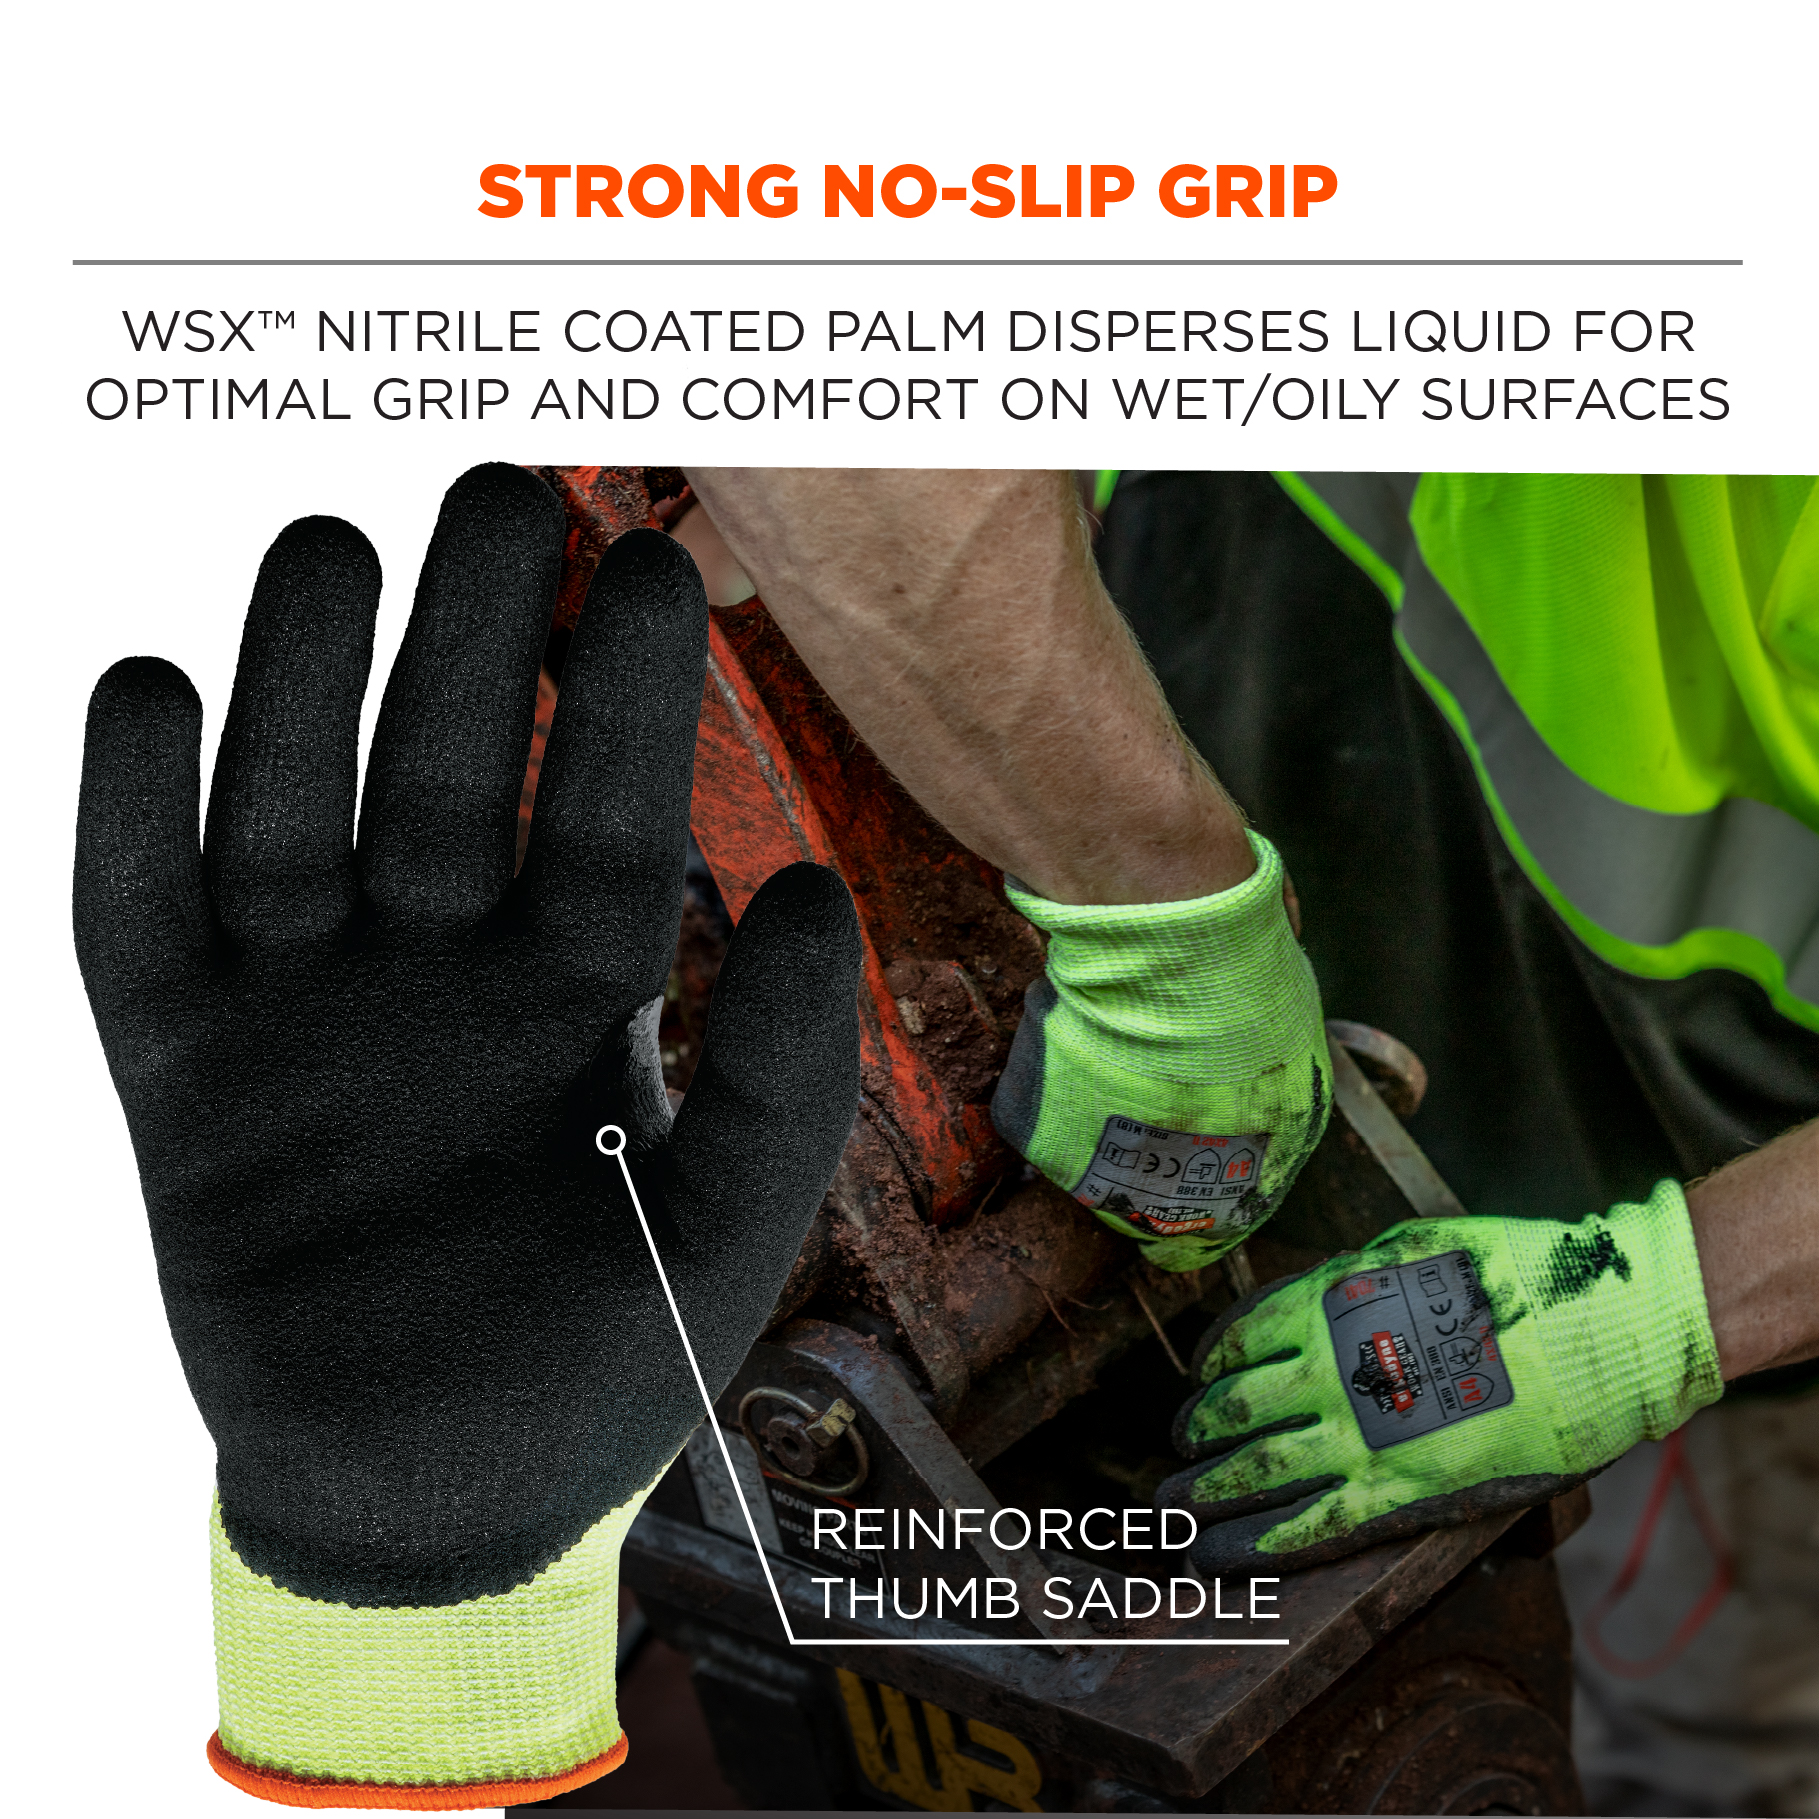 True Grip High Performance Utility Work Gloves - Black/Red - Large